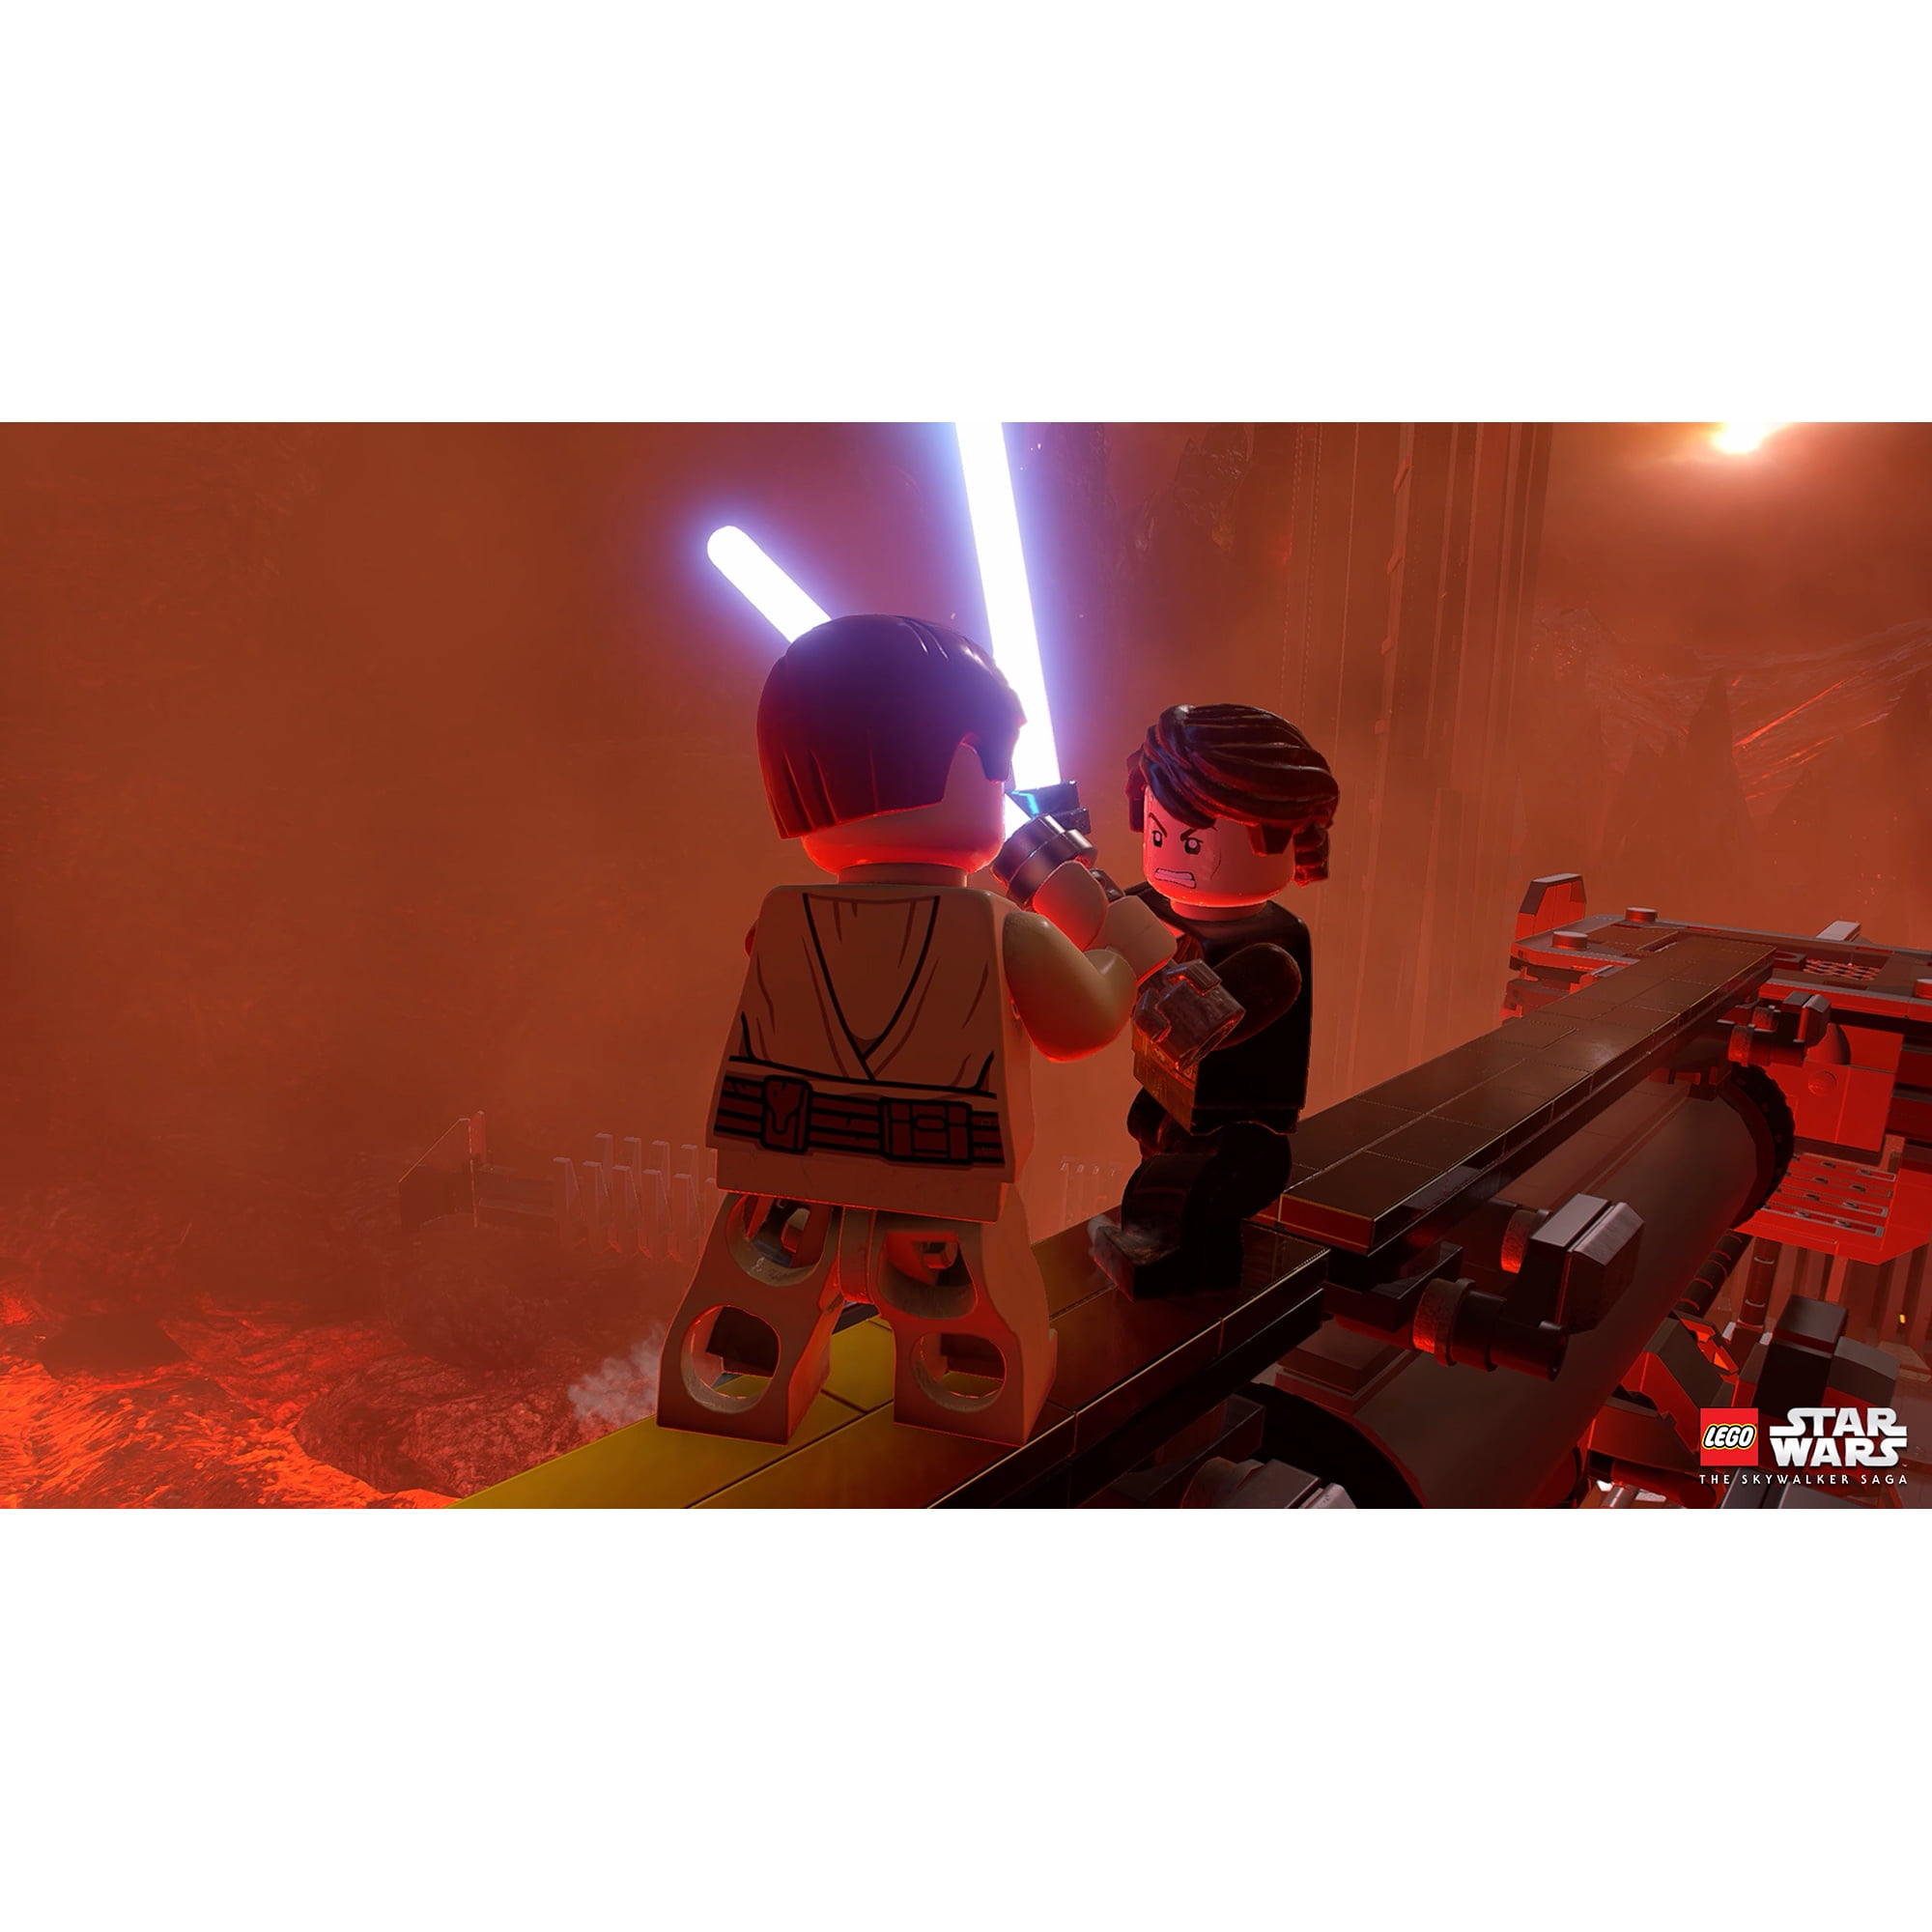 LEGO Star Wars Skywalker Saga - Microsoft Xbox One for sale online